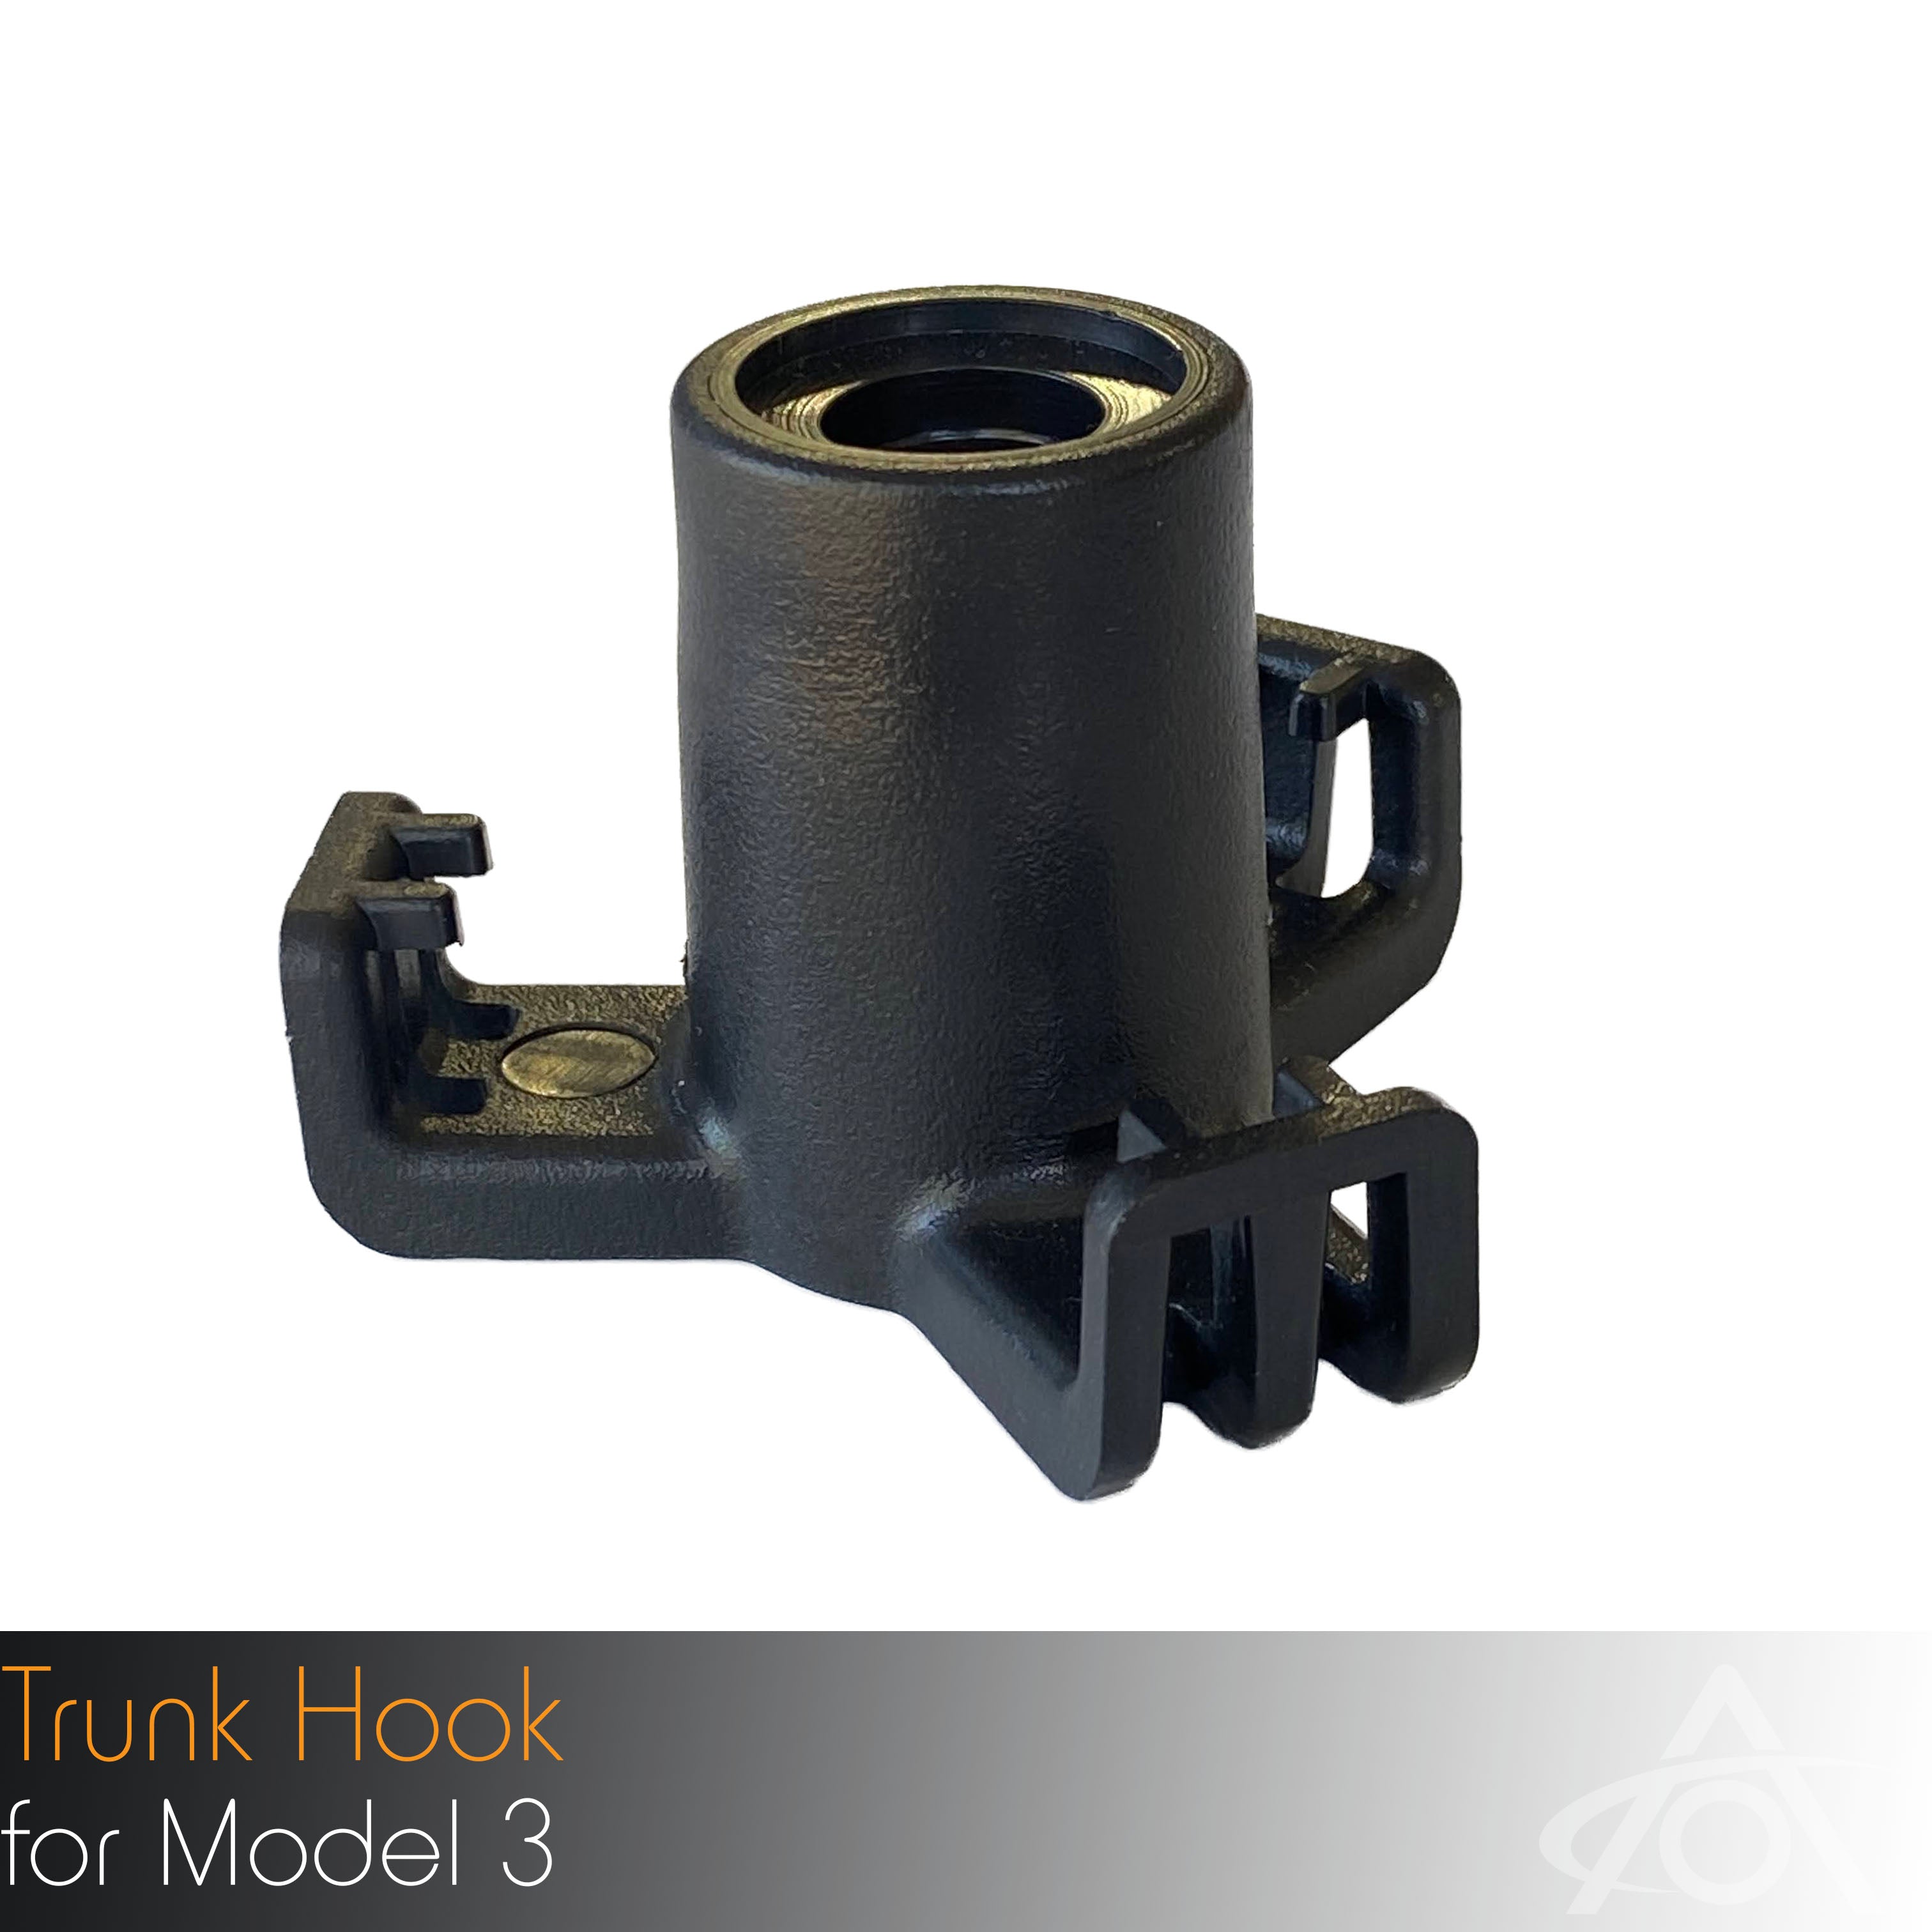 Trunk hook for Model 3